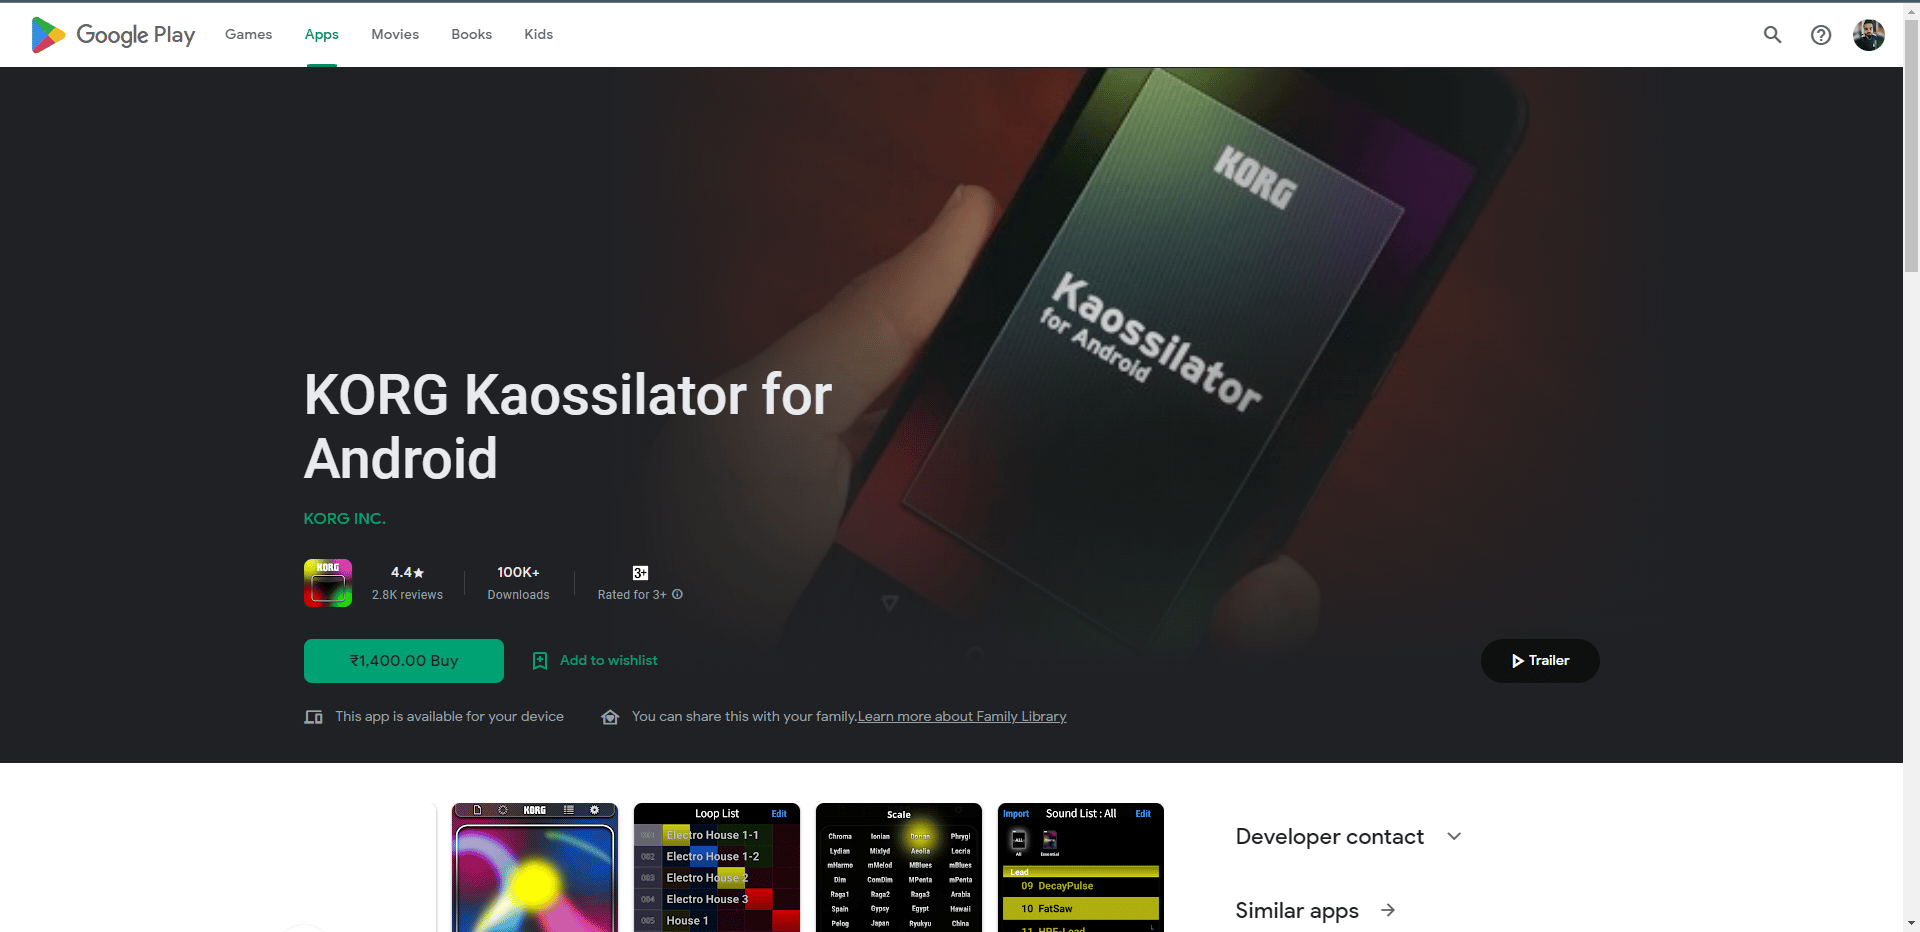 KORG Kaossilator Play Store webpage